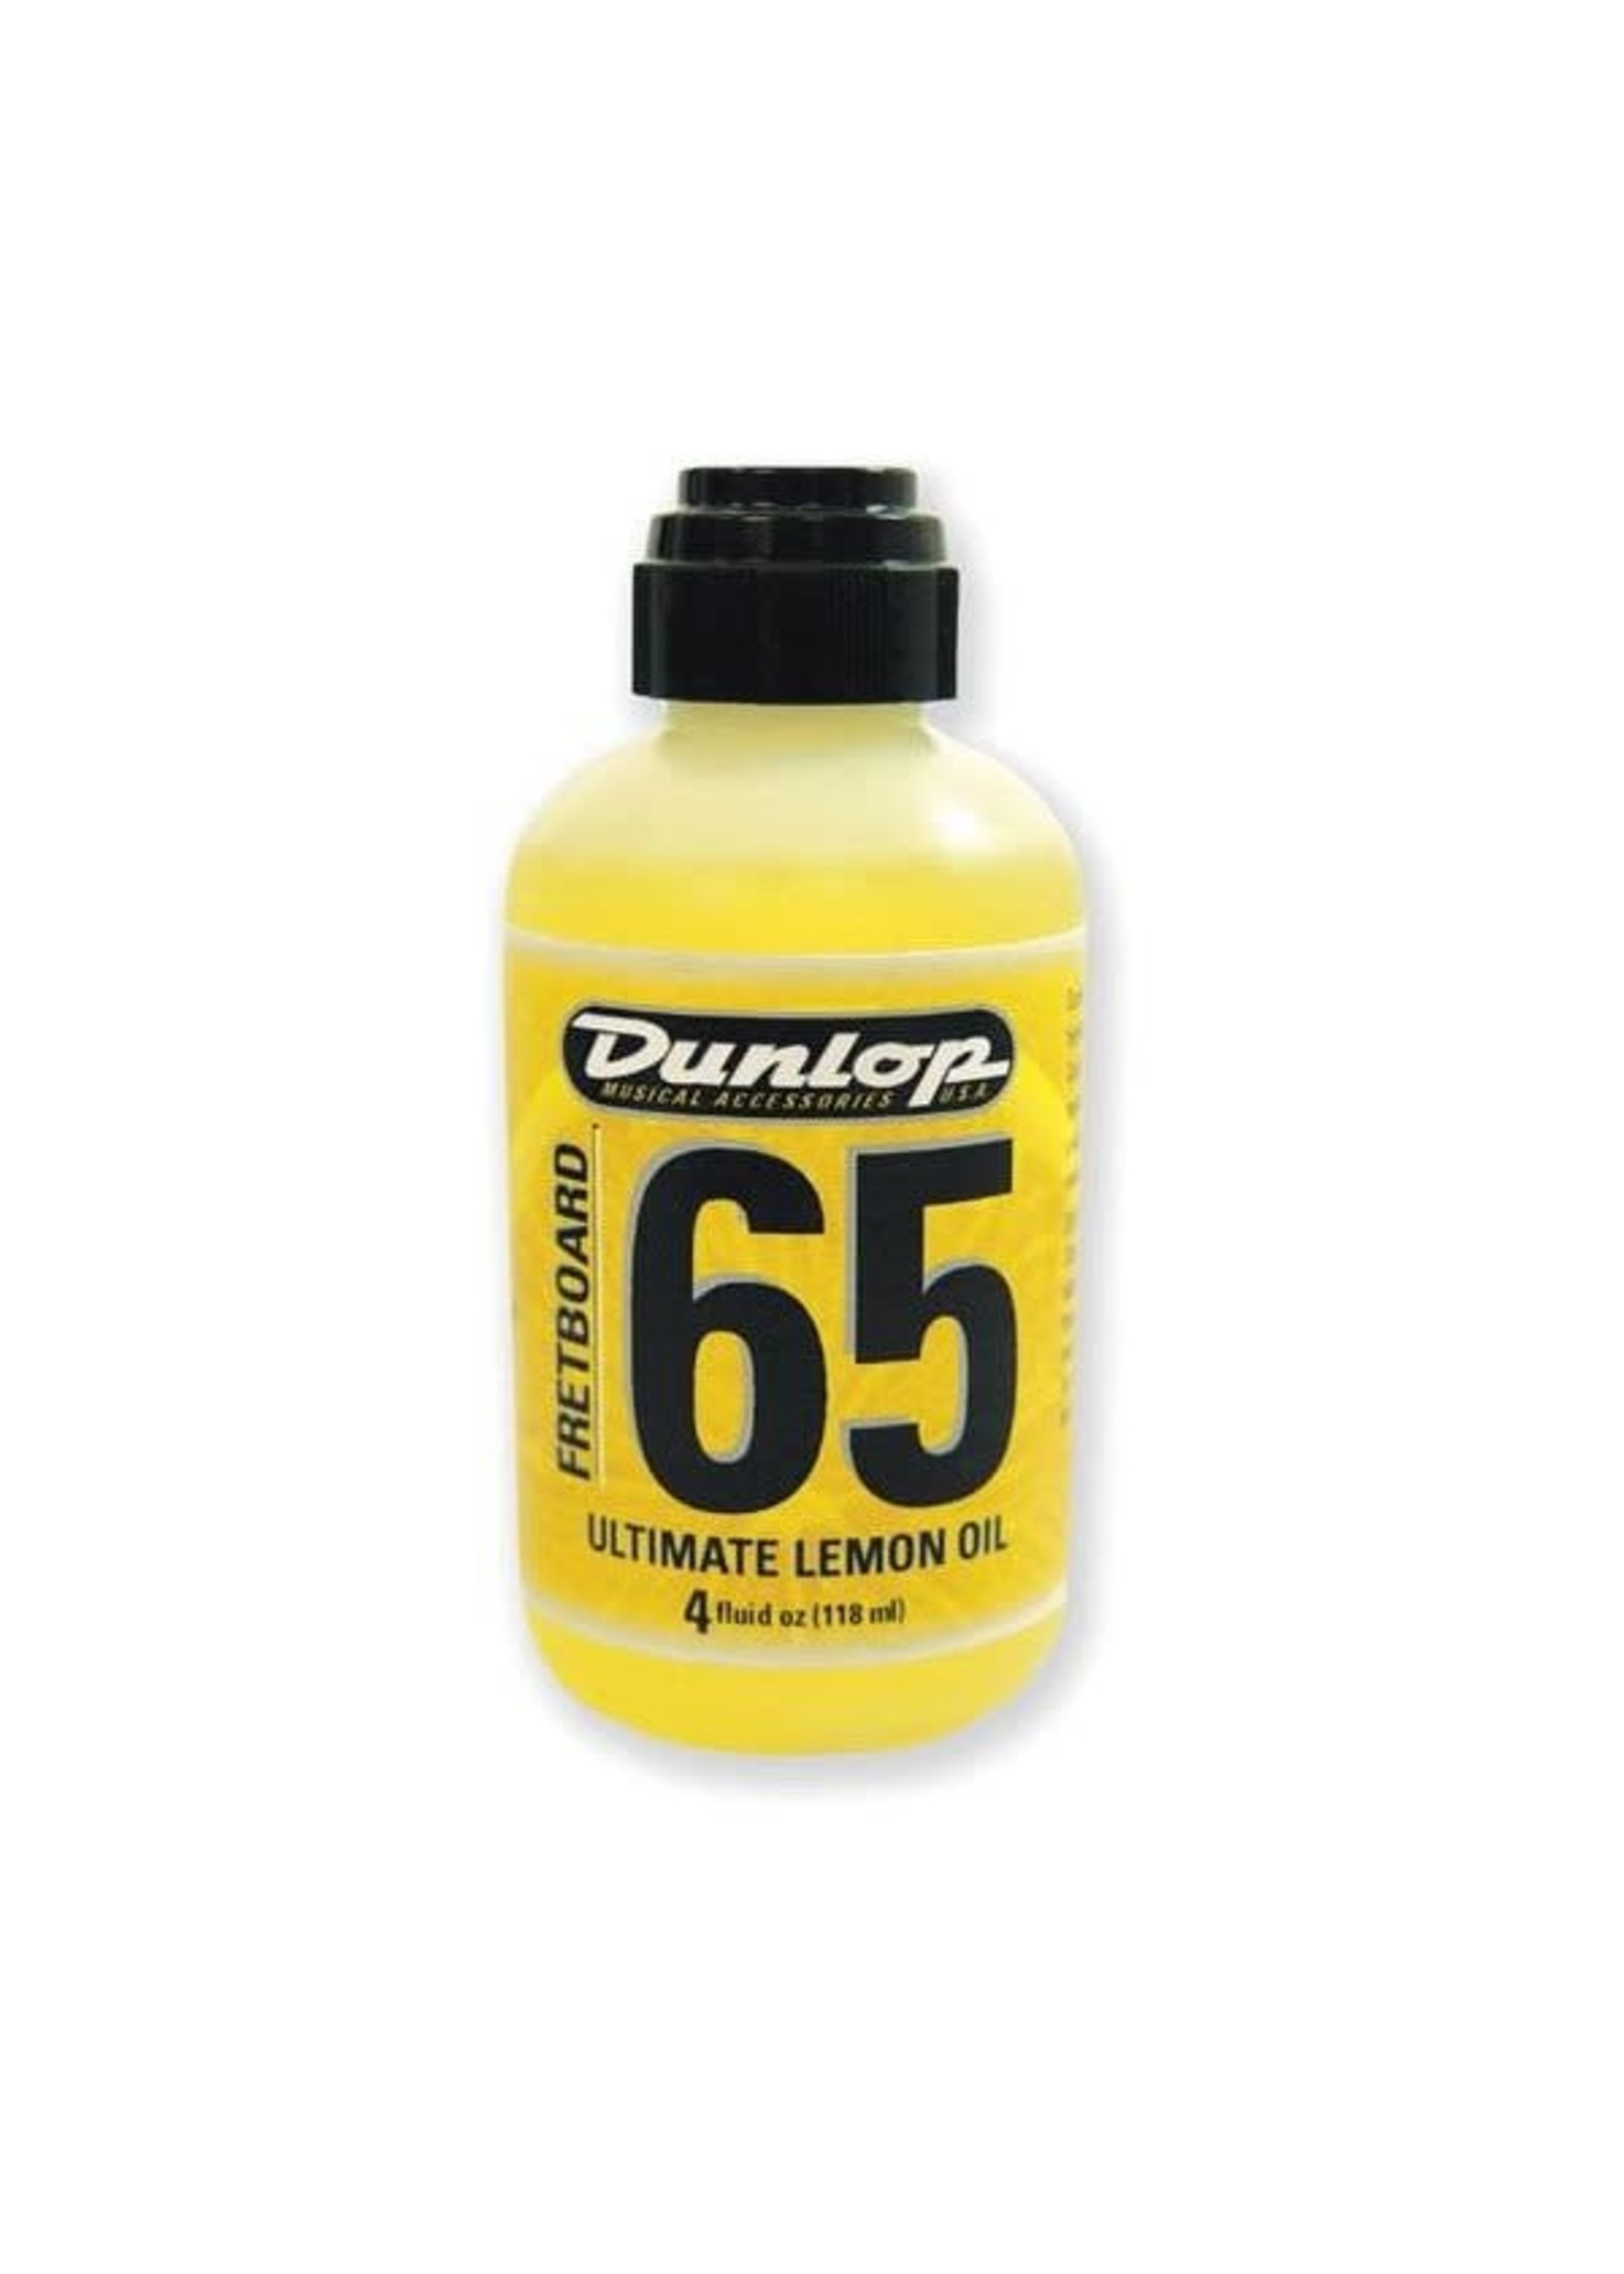 Dunlop Dunlop Ultimate Lemon Oil Polish Guitar, 4oz Item ID: JD6554